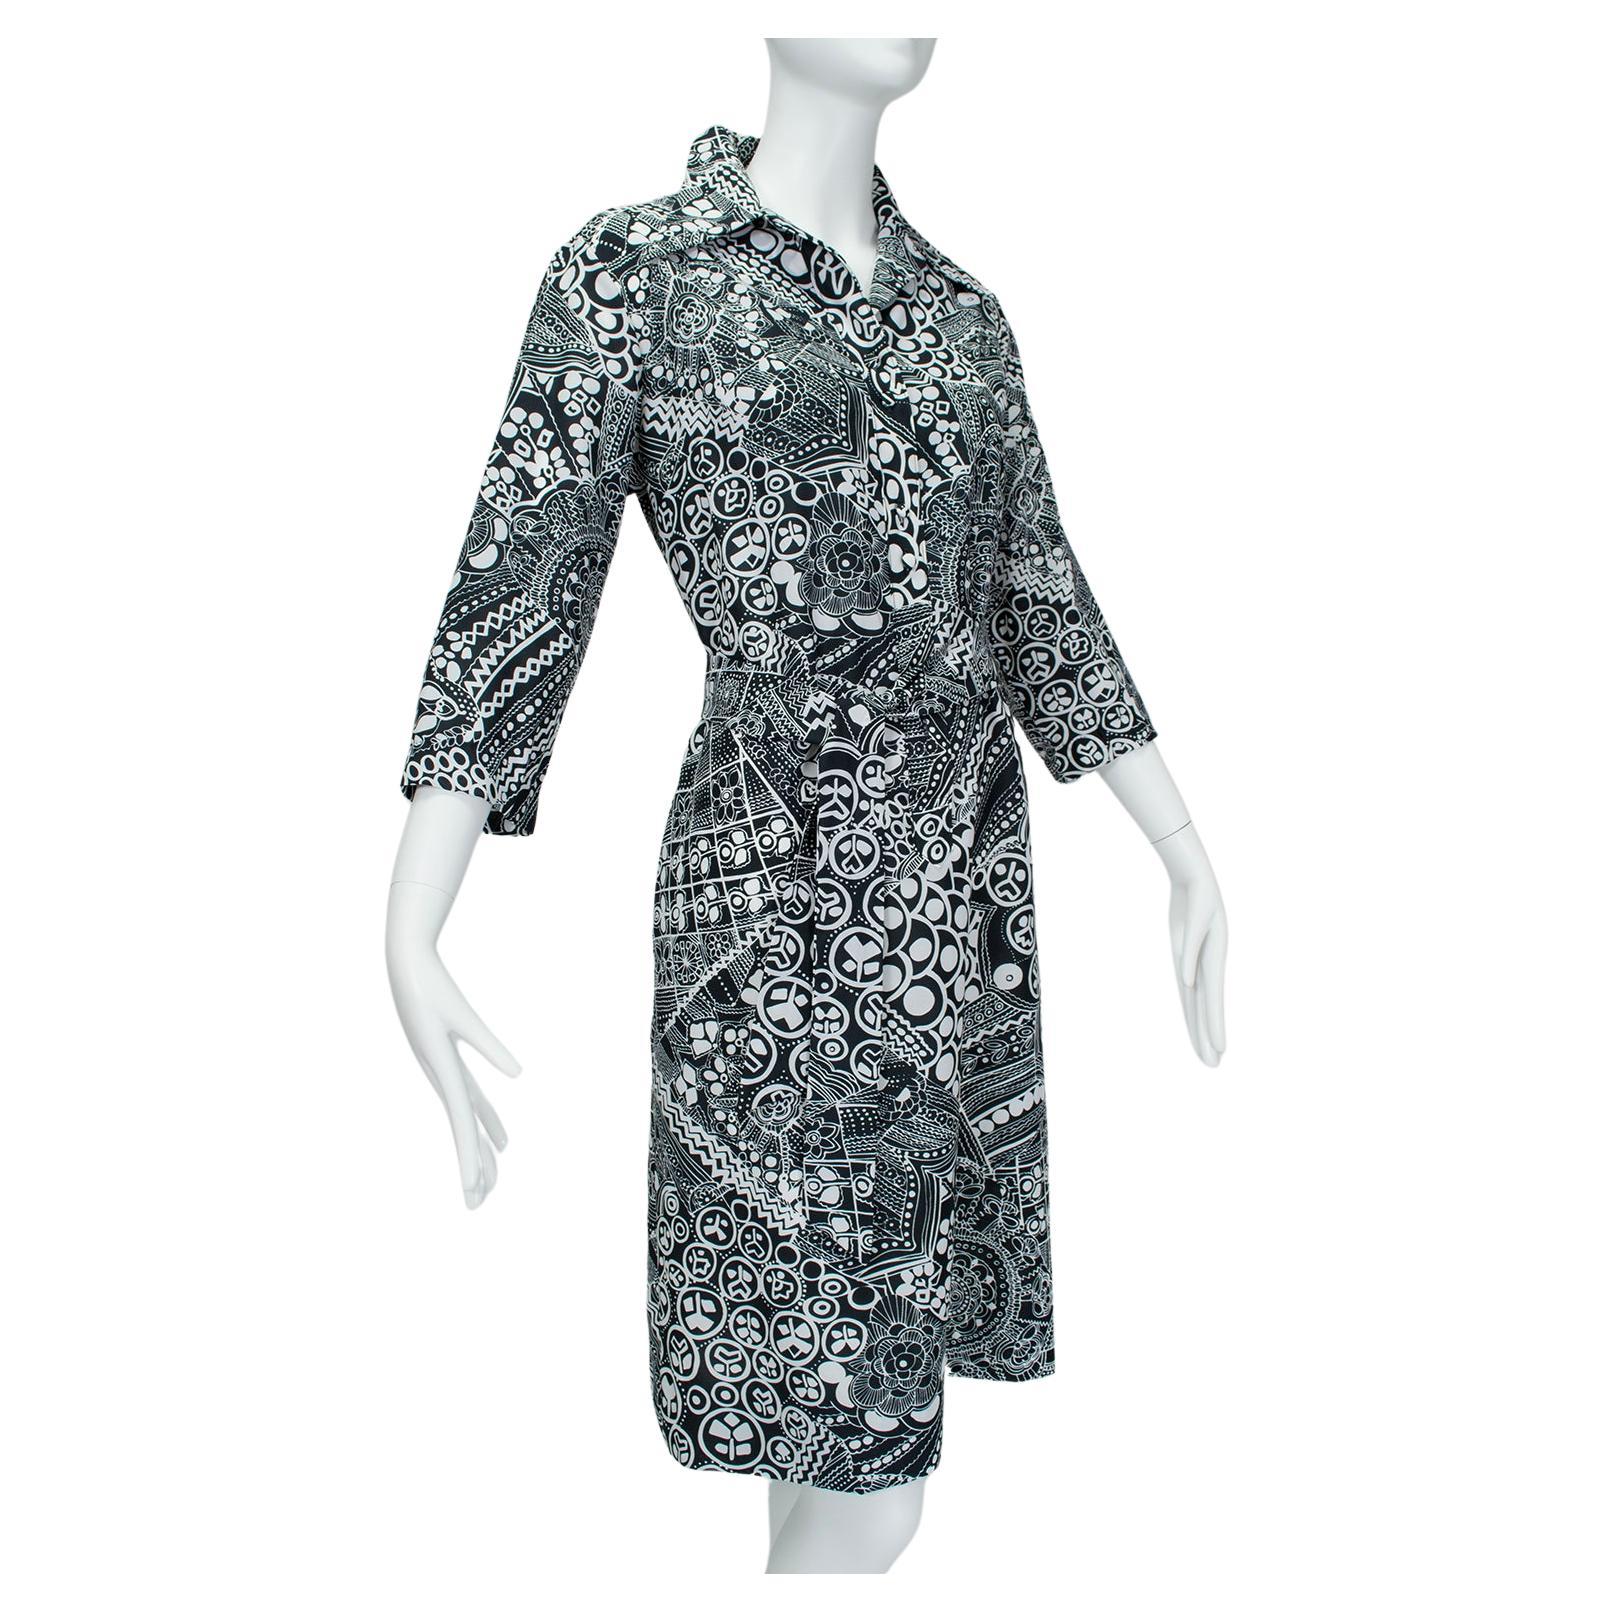 Lanvin Black and White Pop Art Belted Shirtwaist Dress - M-L, 1970s For Sale